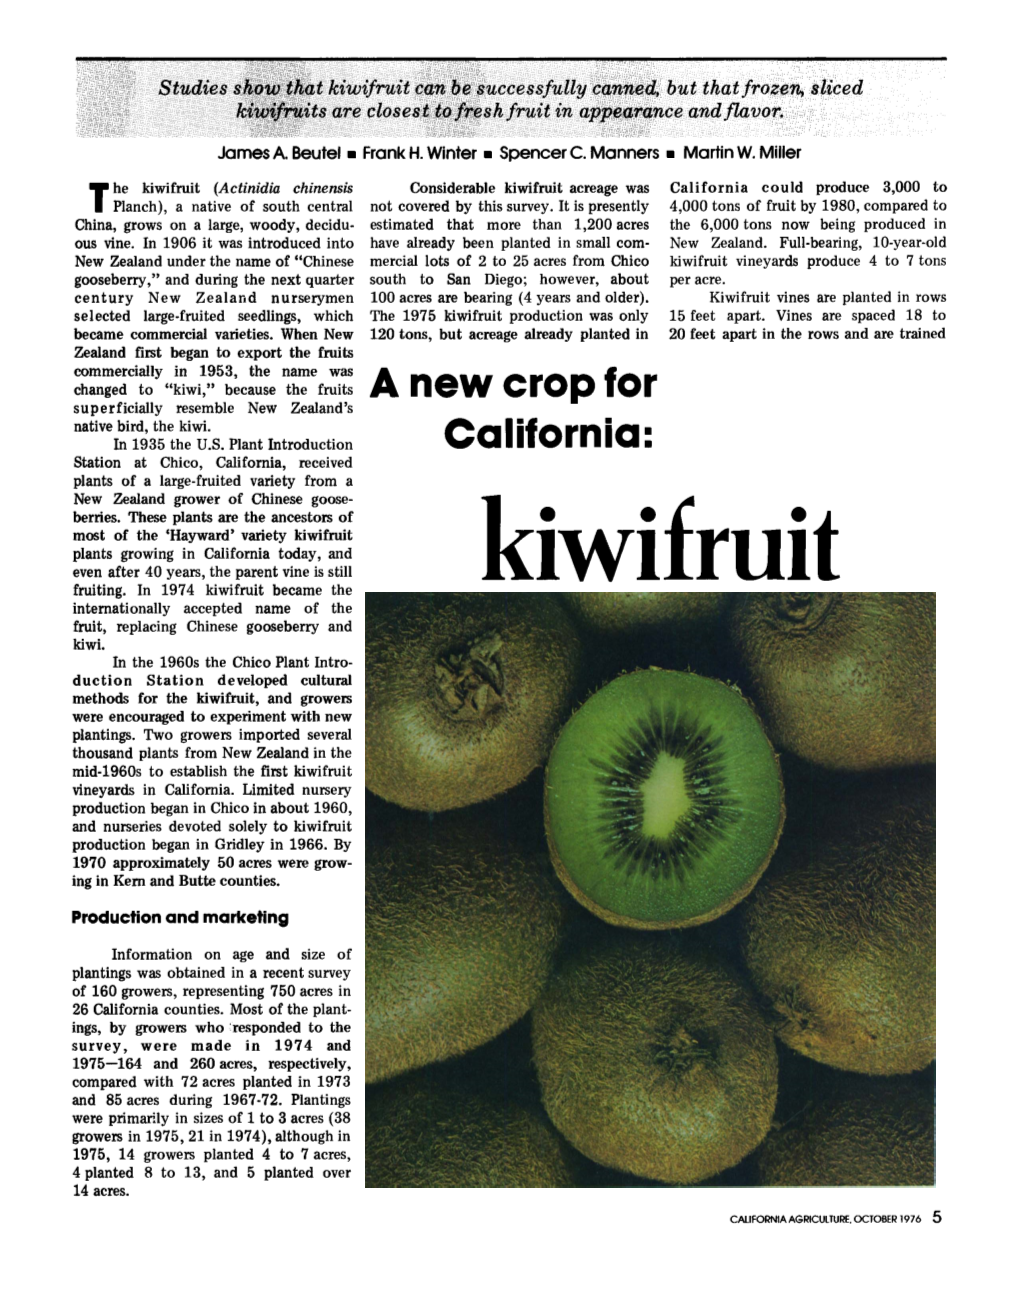 A New Crop for California: Kiwifruit